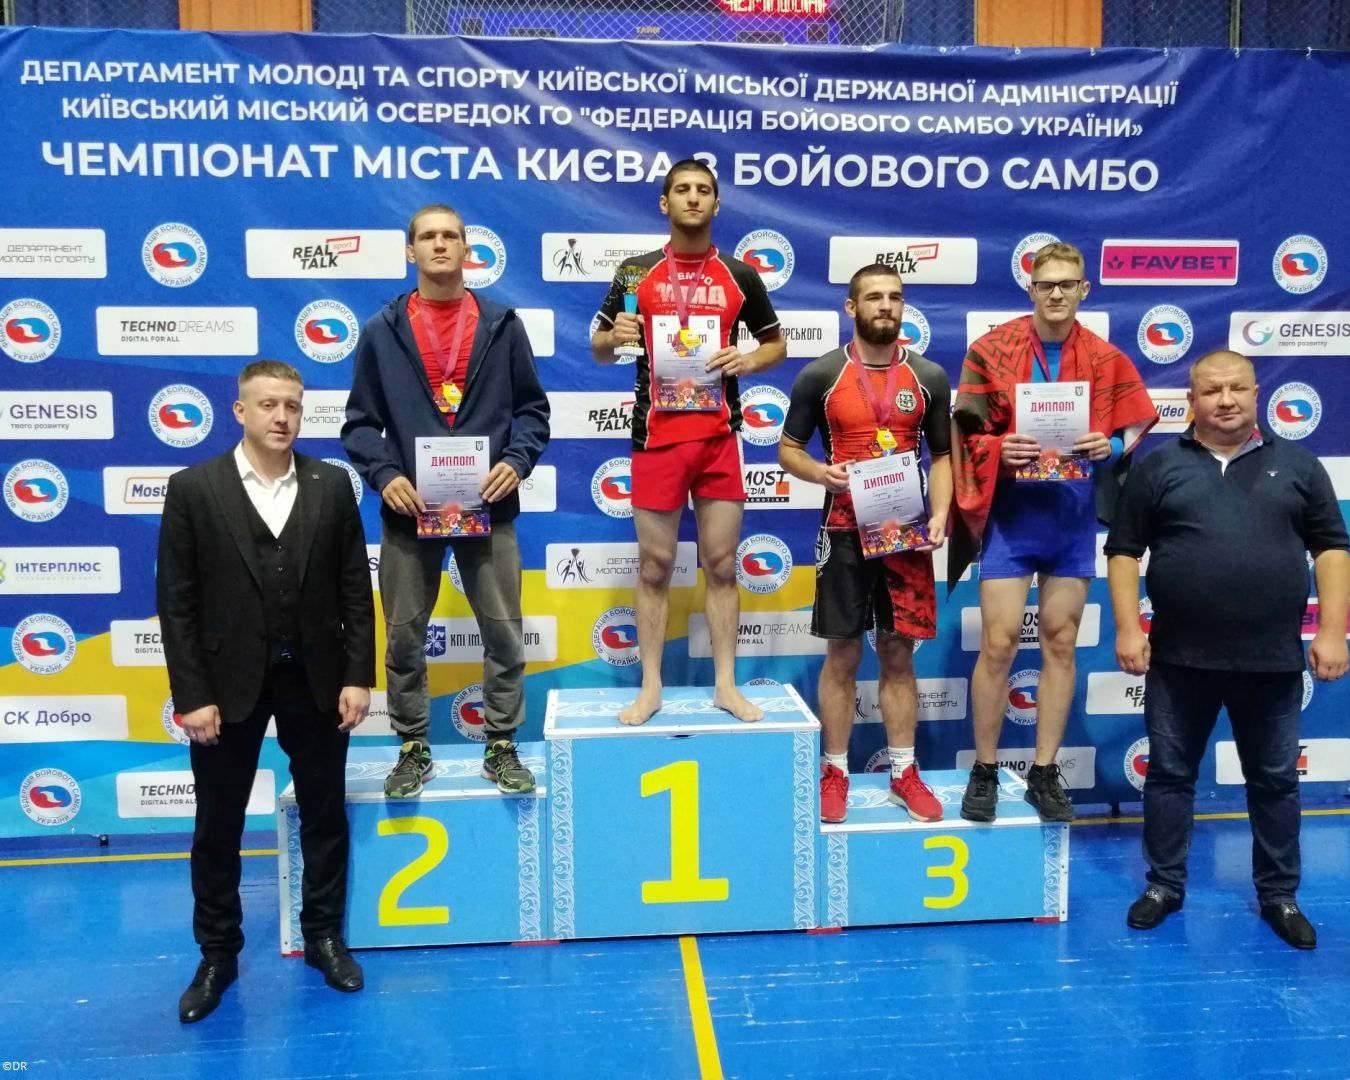 Un Azerbaïdjanais de 20 ans est devenu champion de sambo à Kiev